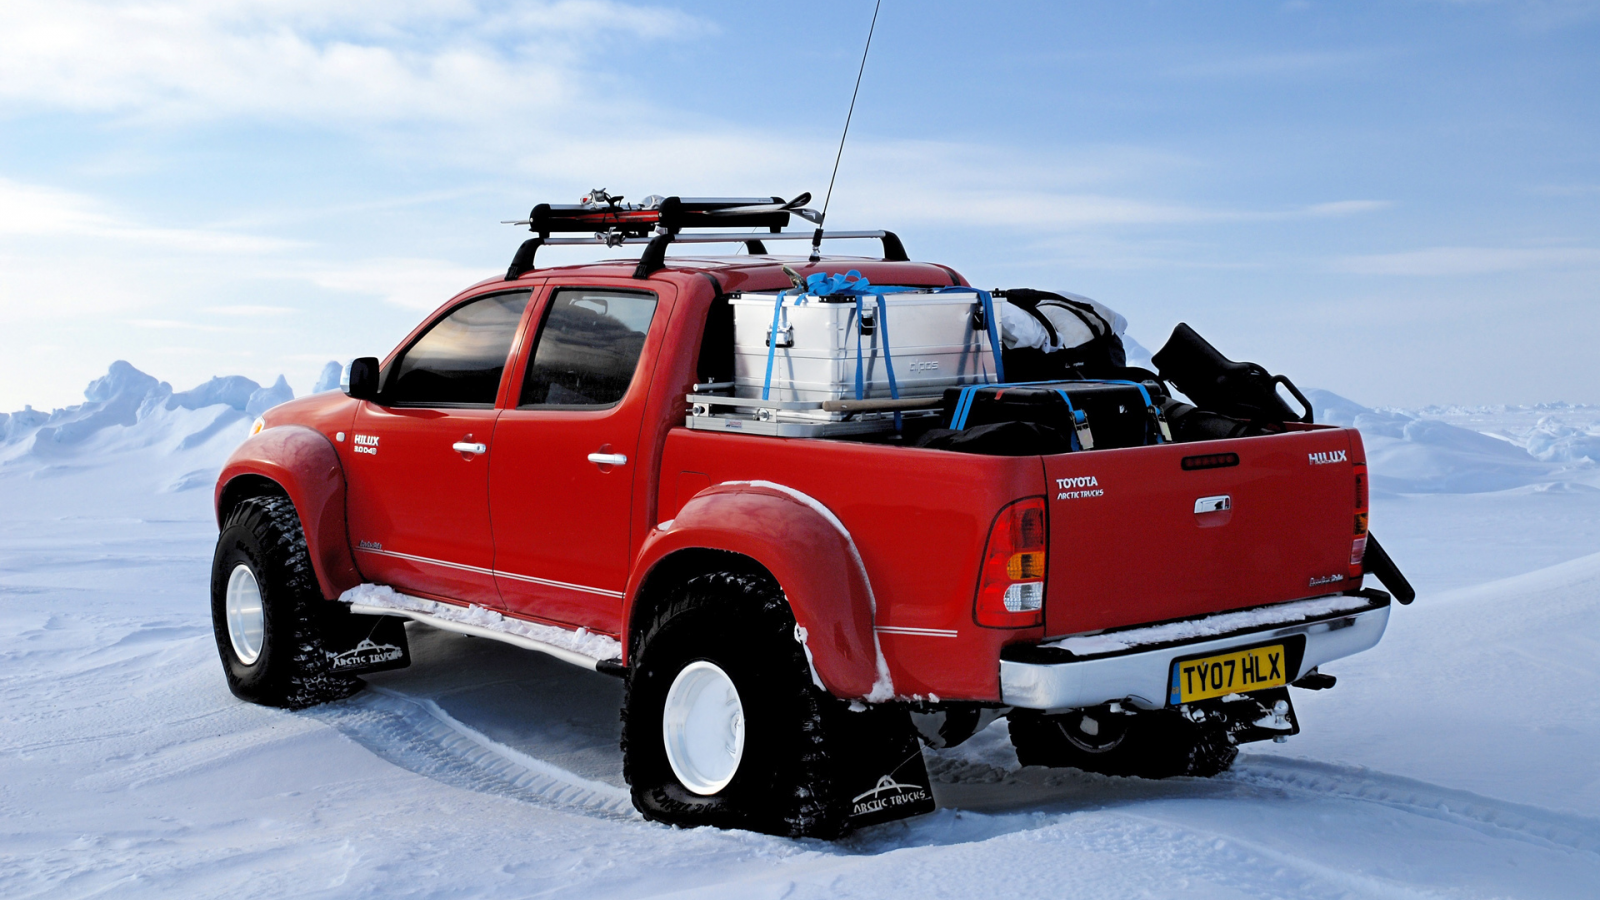 north pole, hilux, arctic trucks, red, toyota, снег, зима, северный полюс